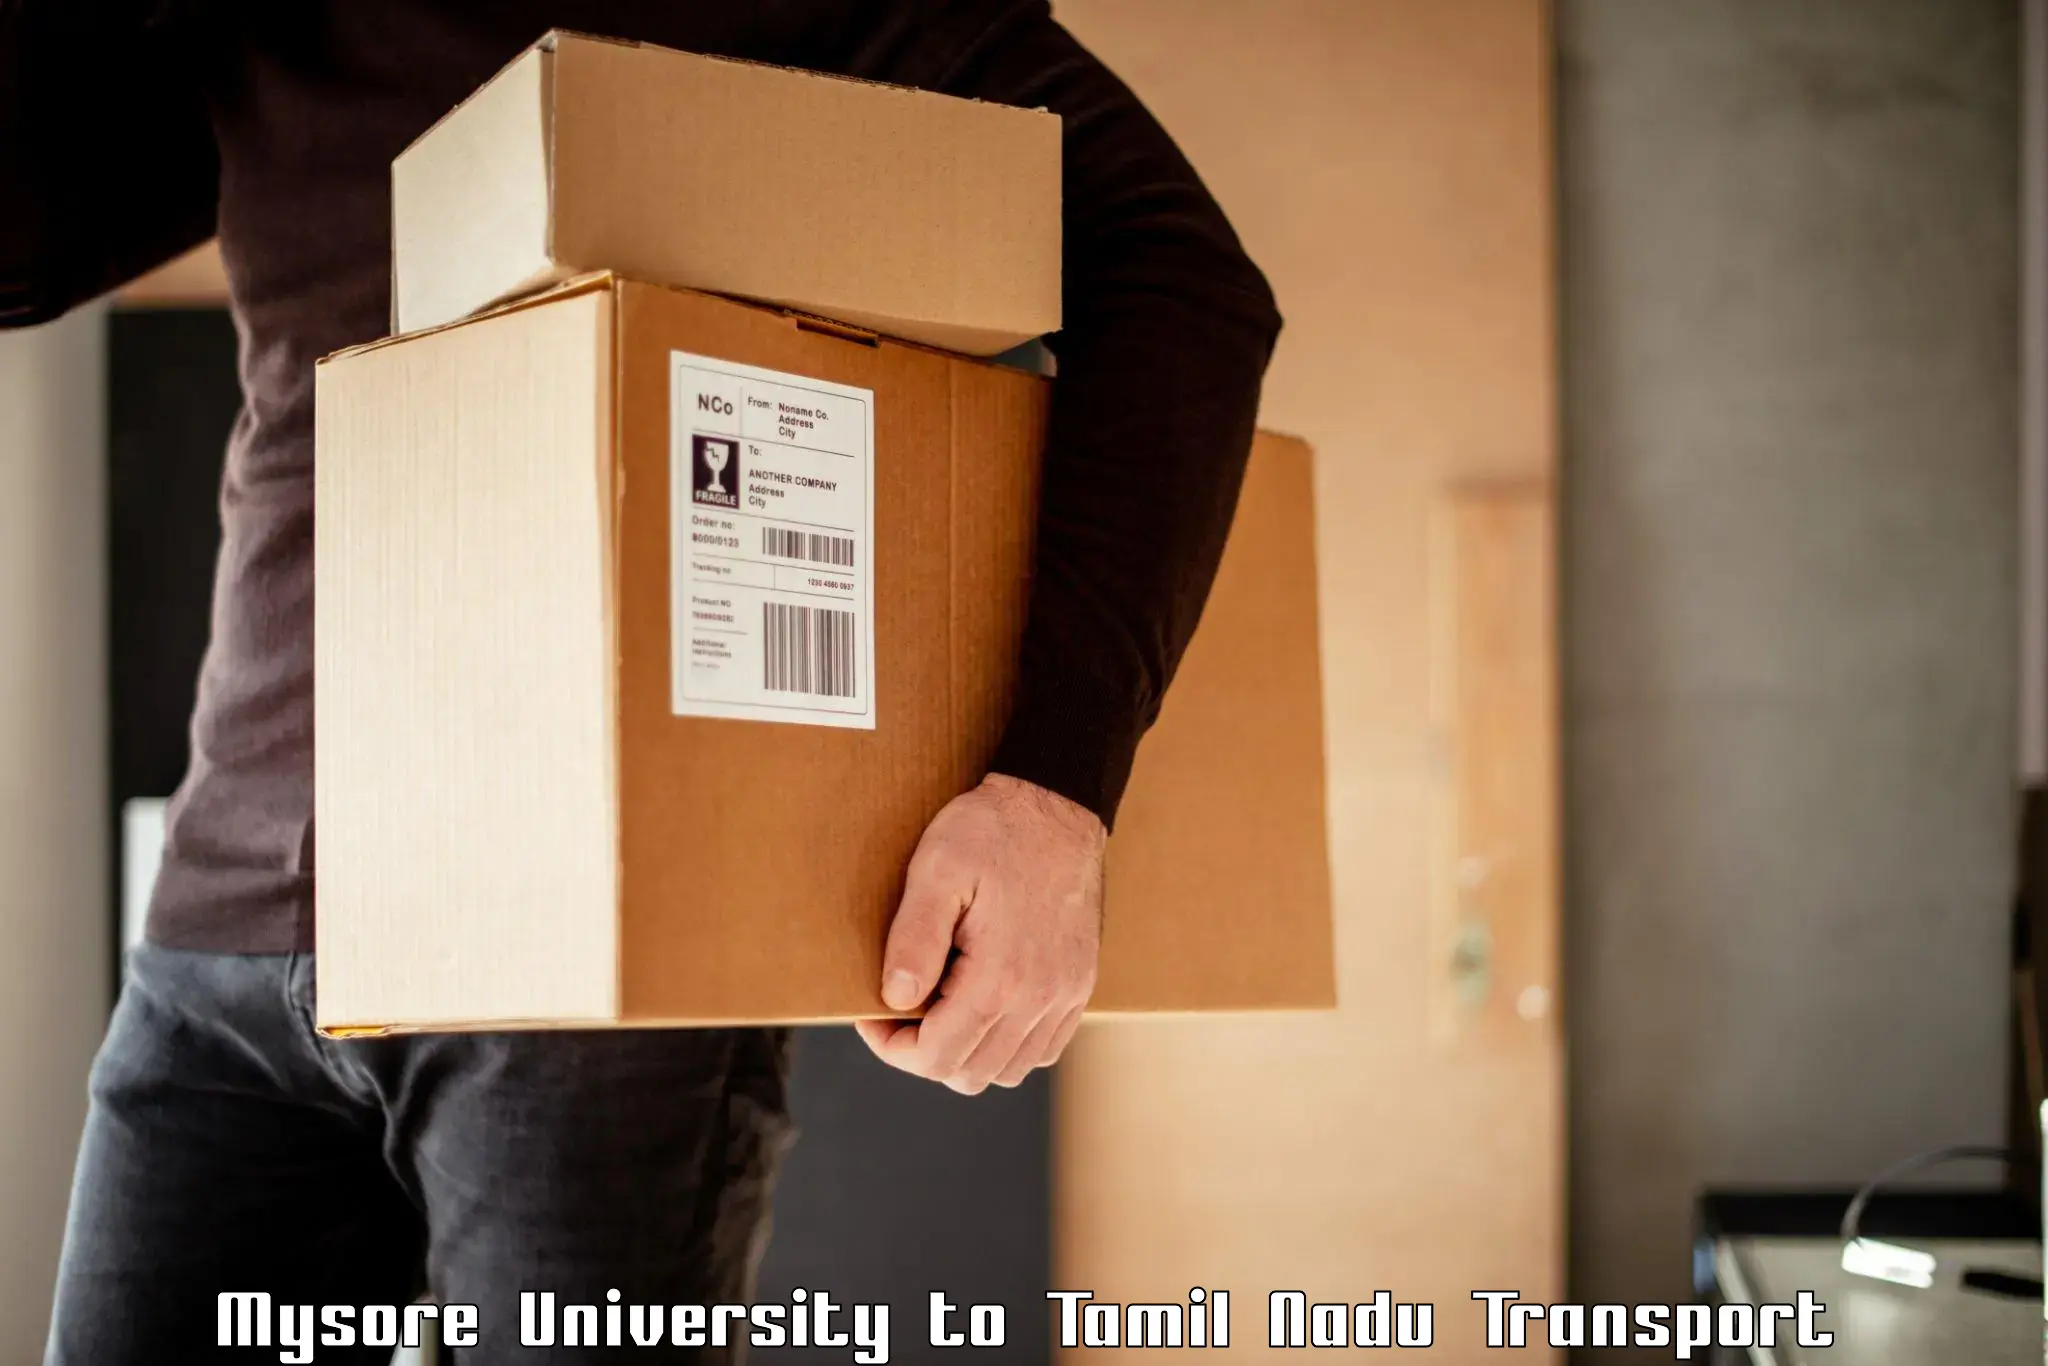 Goods delivery service Mysore University to Tamil Nadu